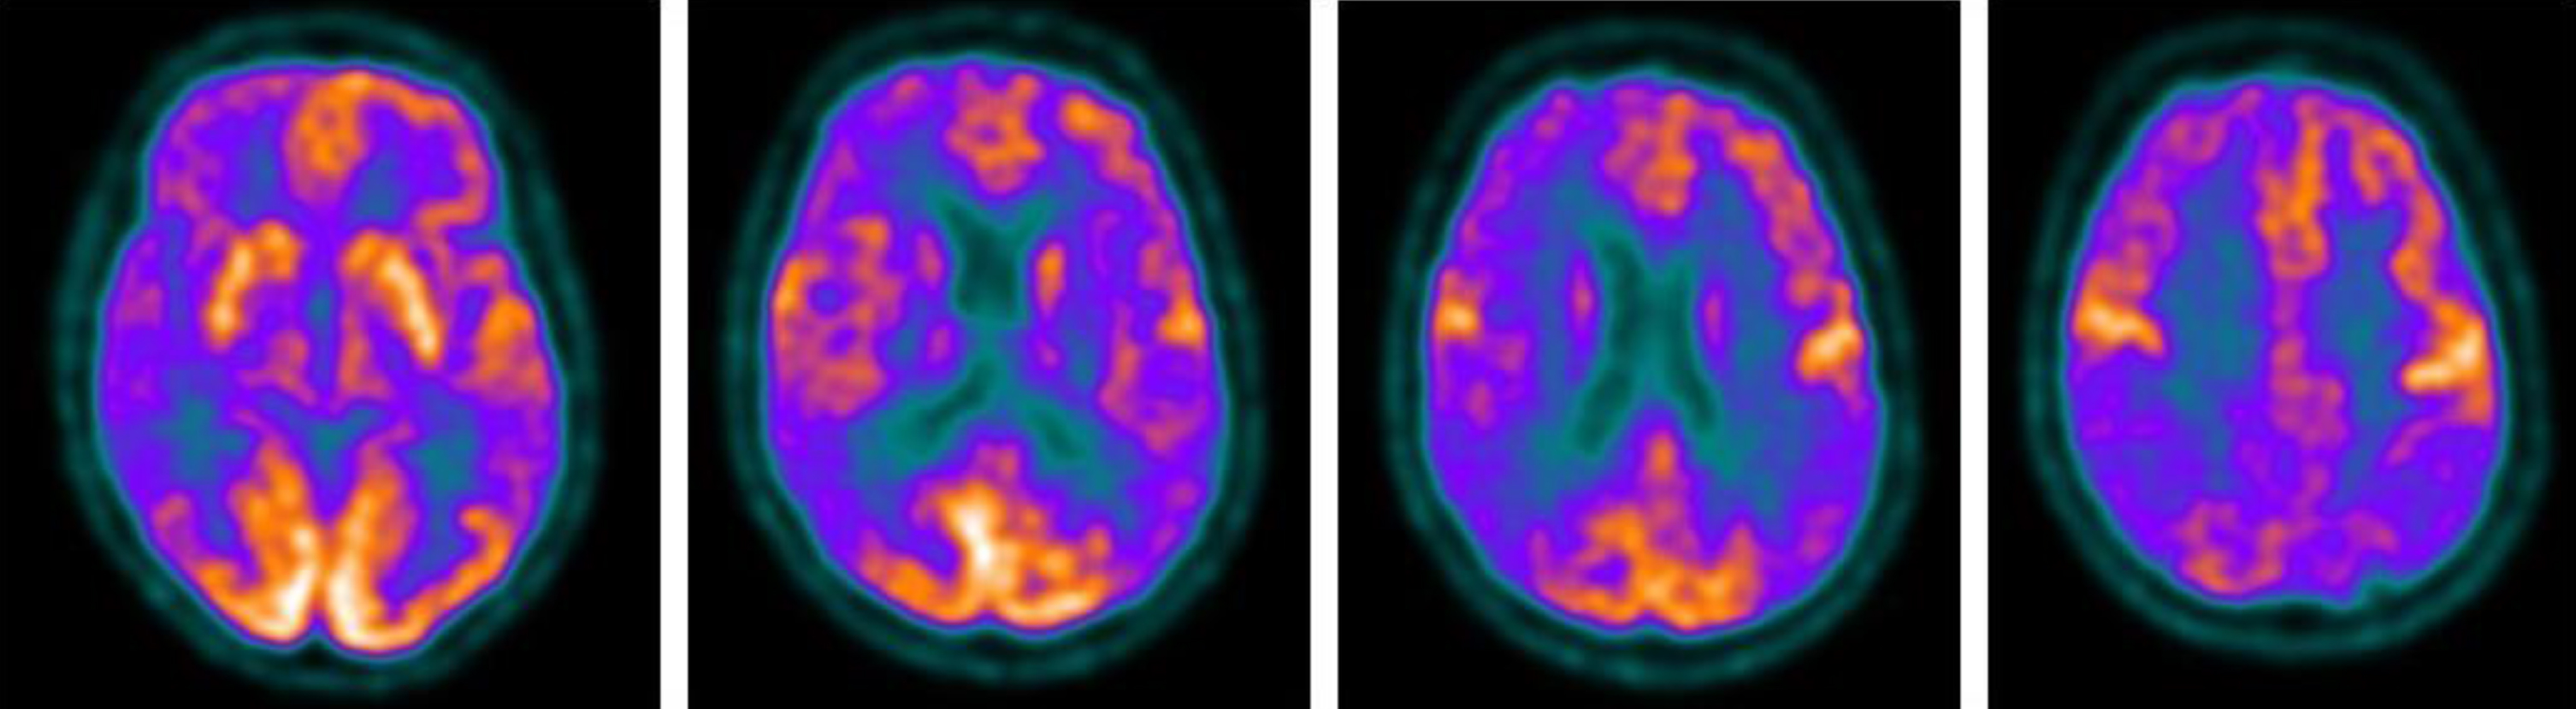 Brain 18F-FDG PET showed a severe cortical hypometabolism involving right frontal lobe, temporo-parietal lobe bilaterally, precuneus, and posterior cingulate cortex.